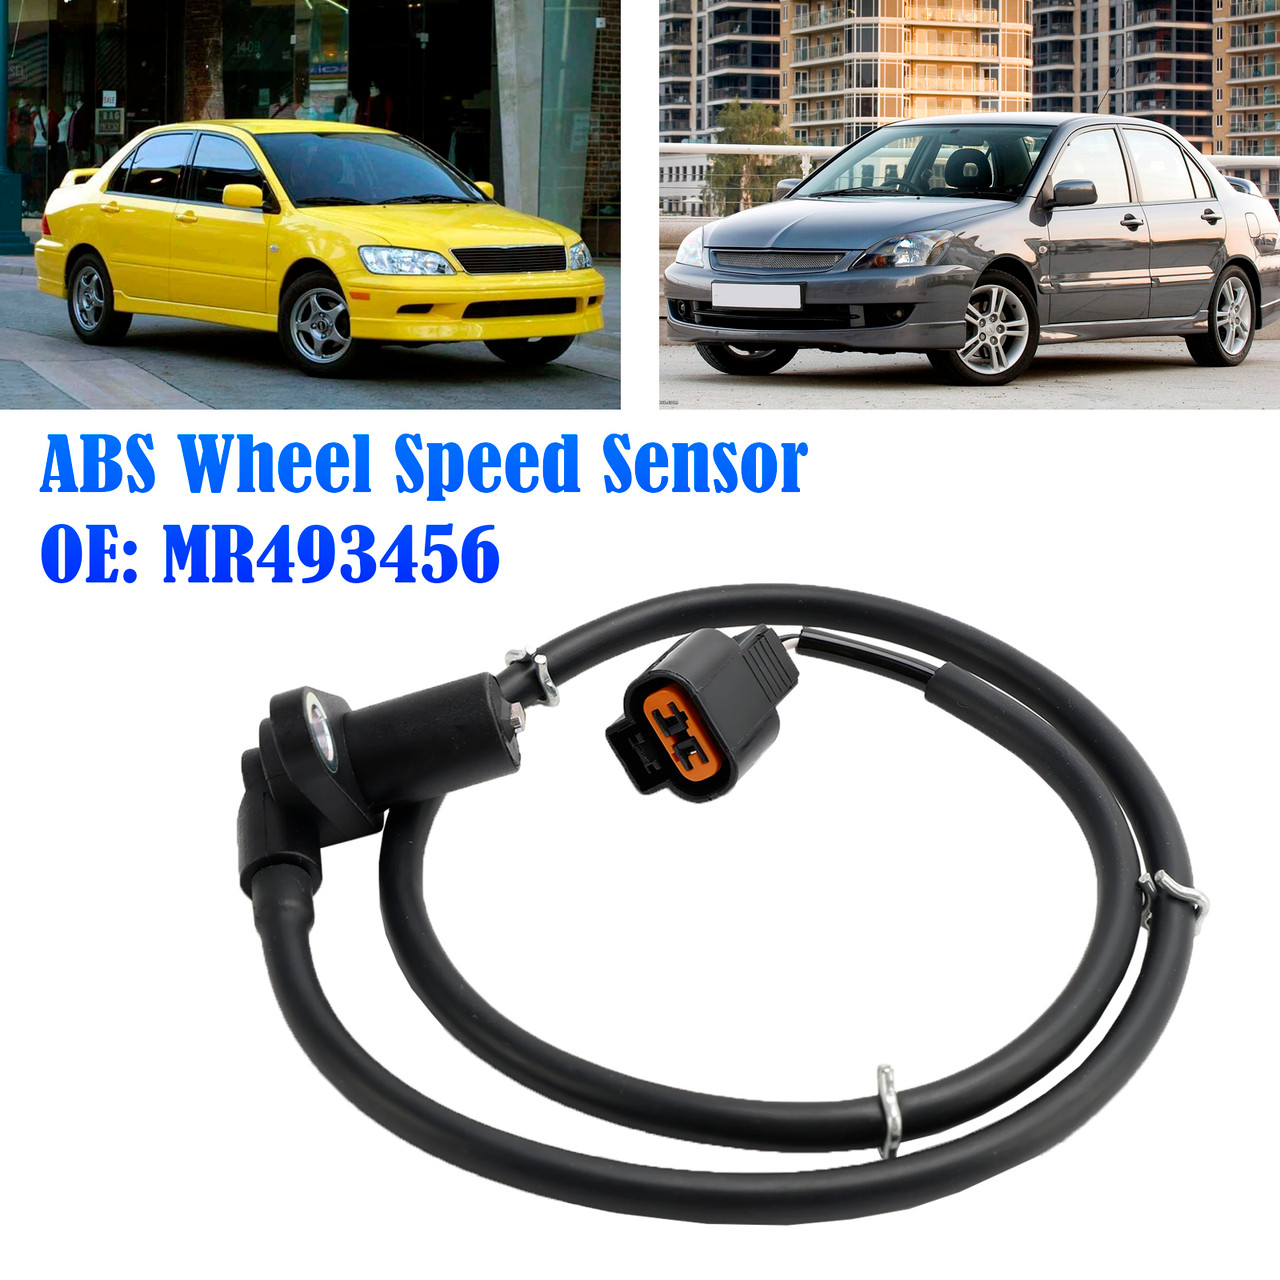 ABS Wheel Speed Sensor Rear Right For Mitsubishi Lancer Evo 2.0 16V MR493456